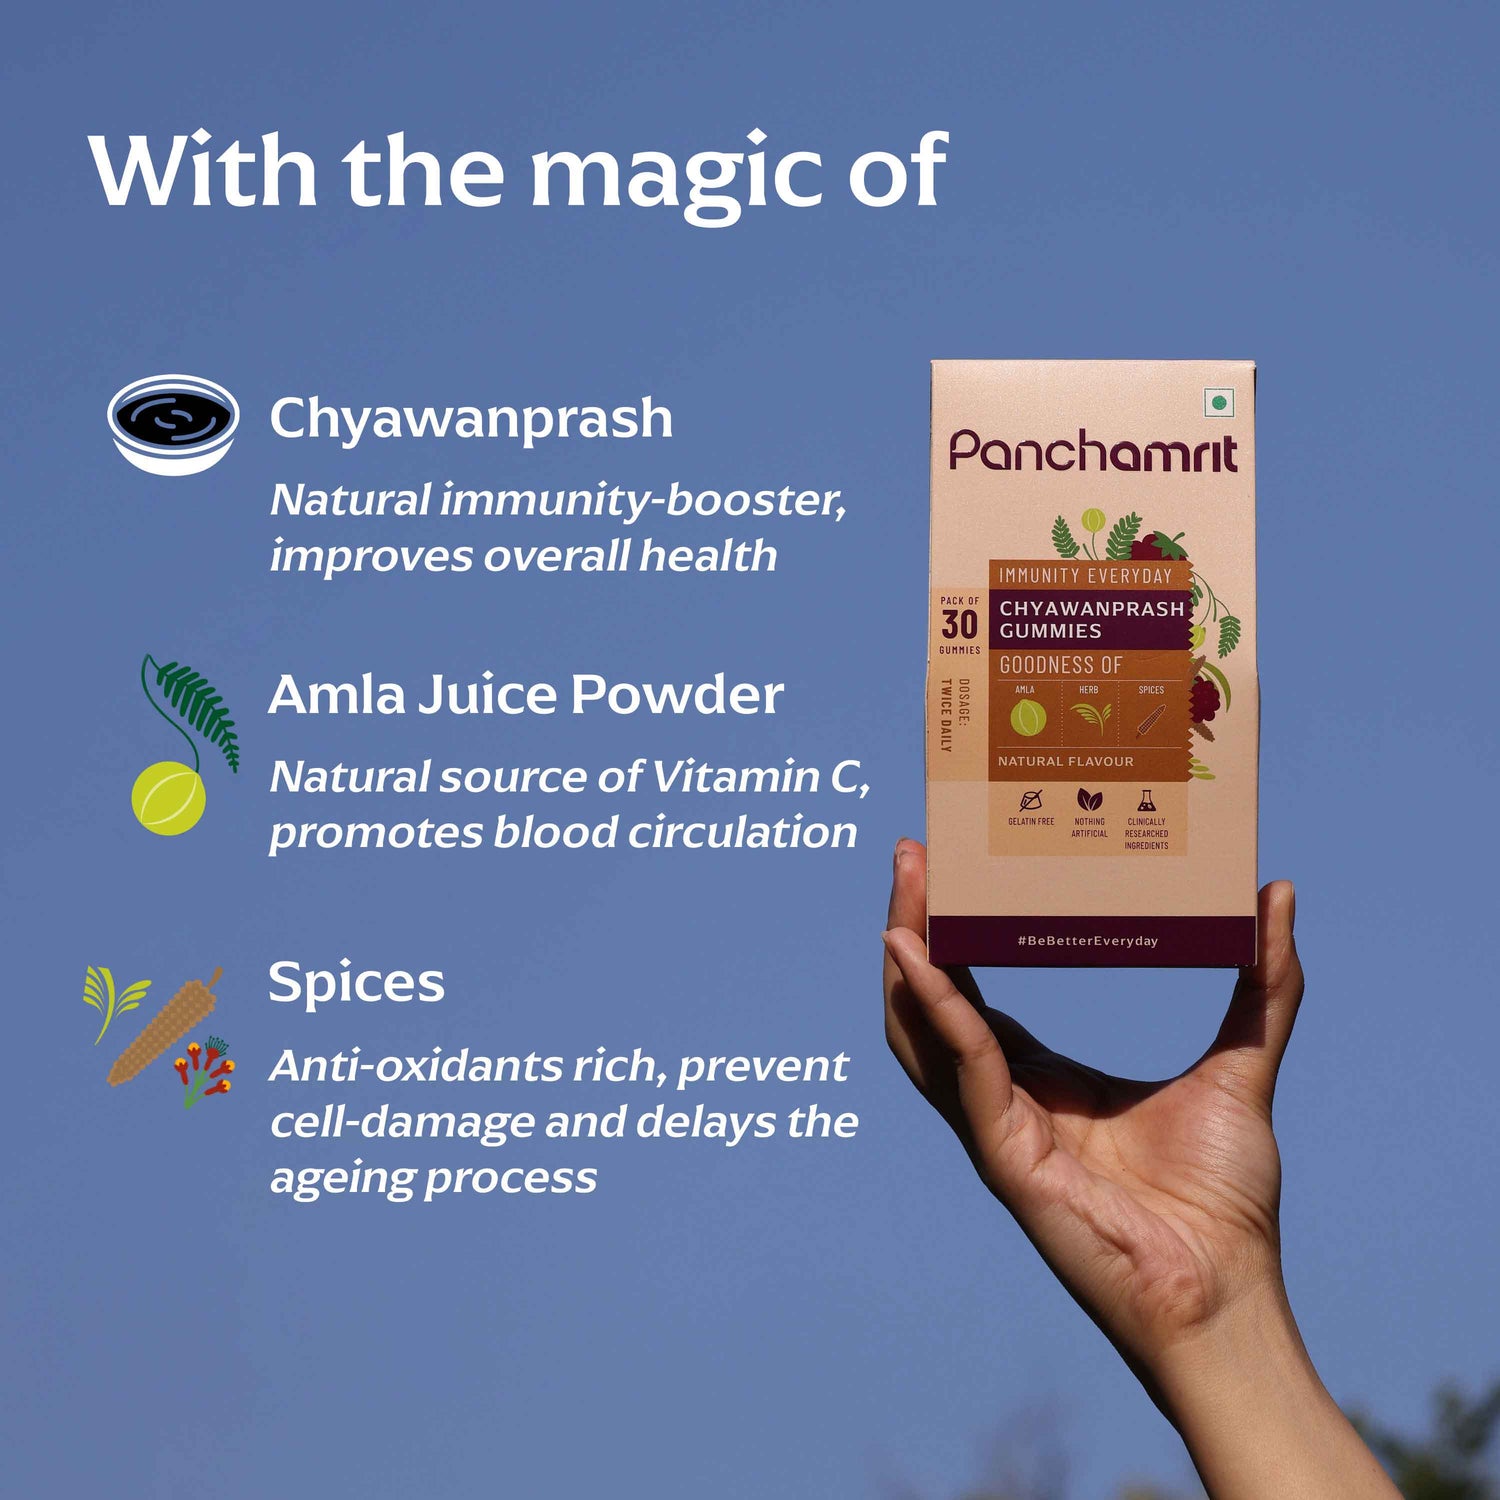 Pack of 1 | Chyawanprash Gummies | Natural Flavor